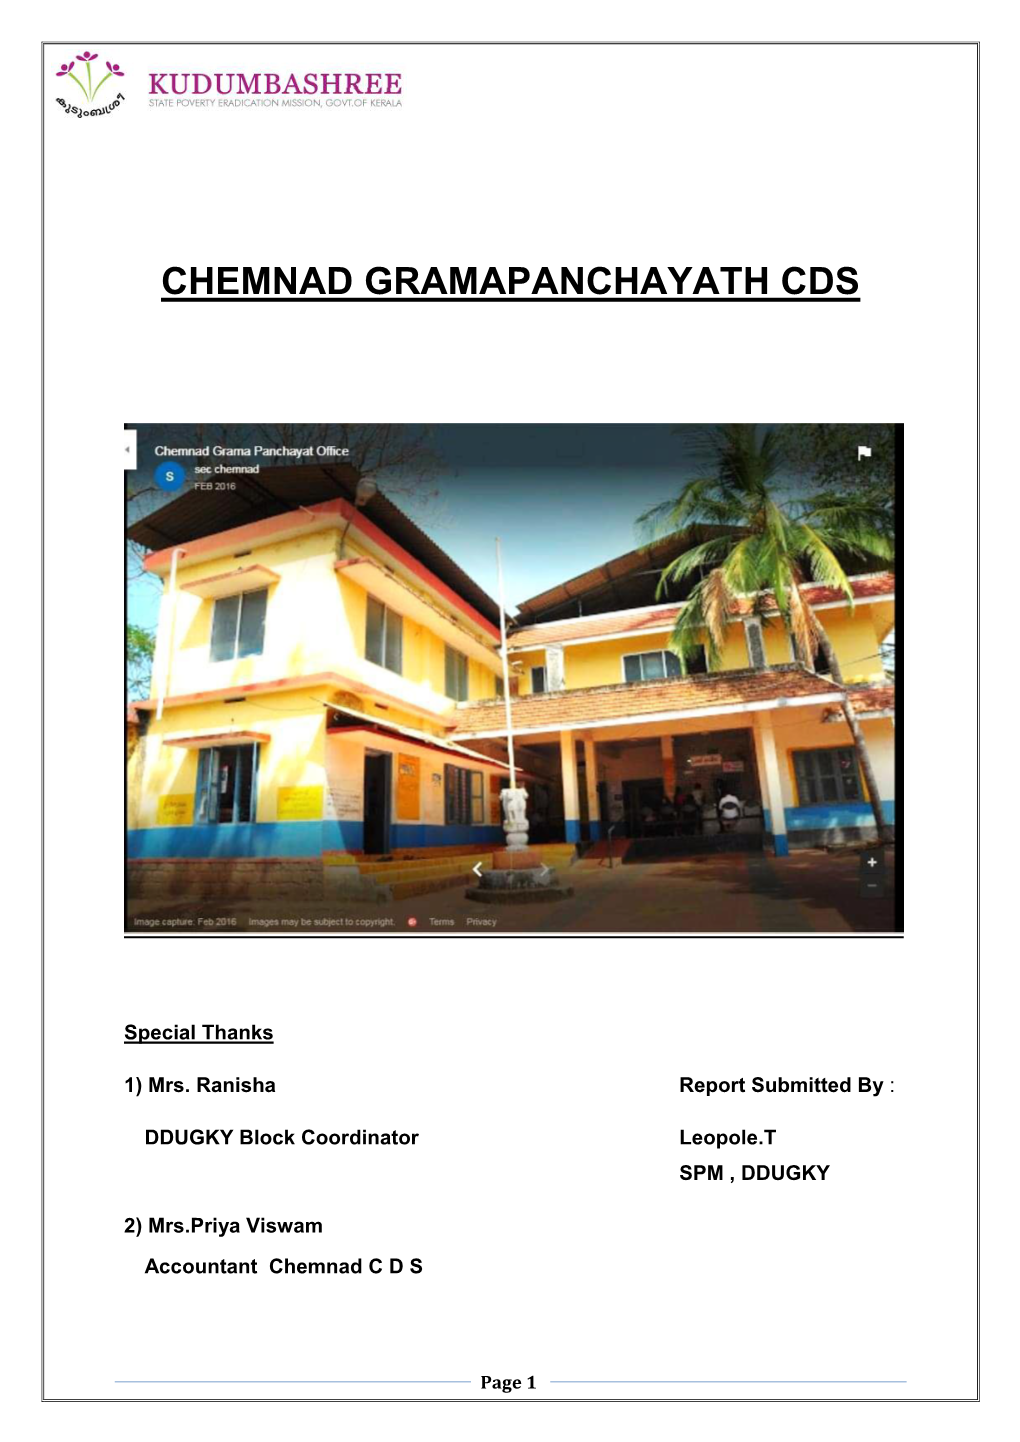 Chemnad Gramapanchayath Cds